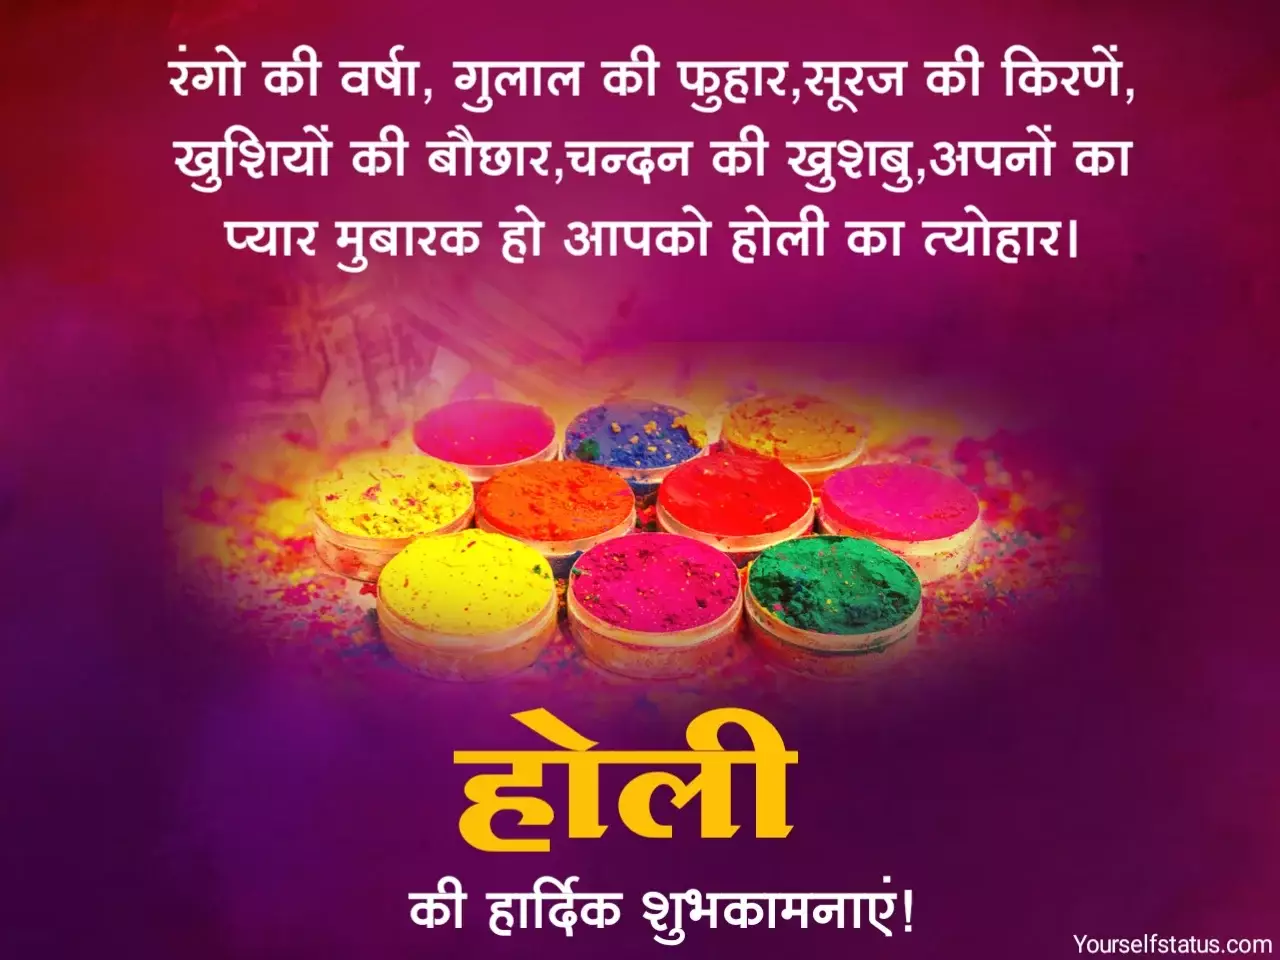 Happy Holi quotes in hindi